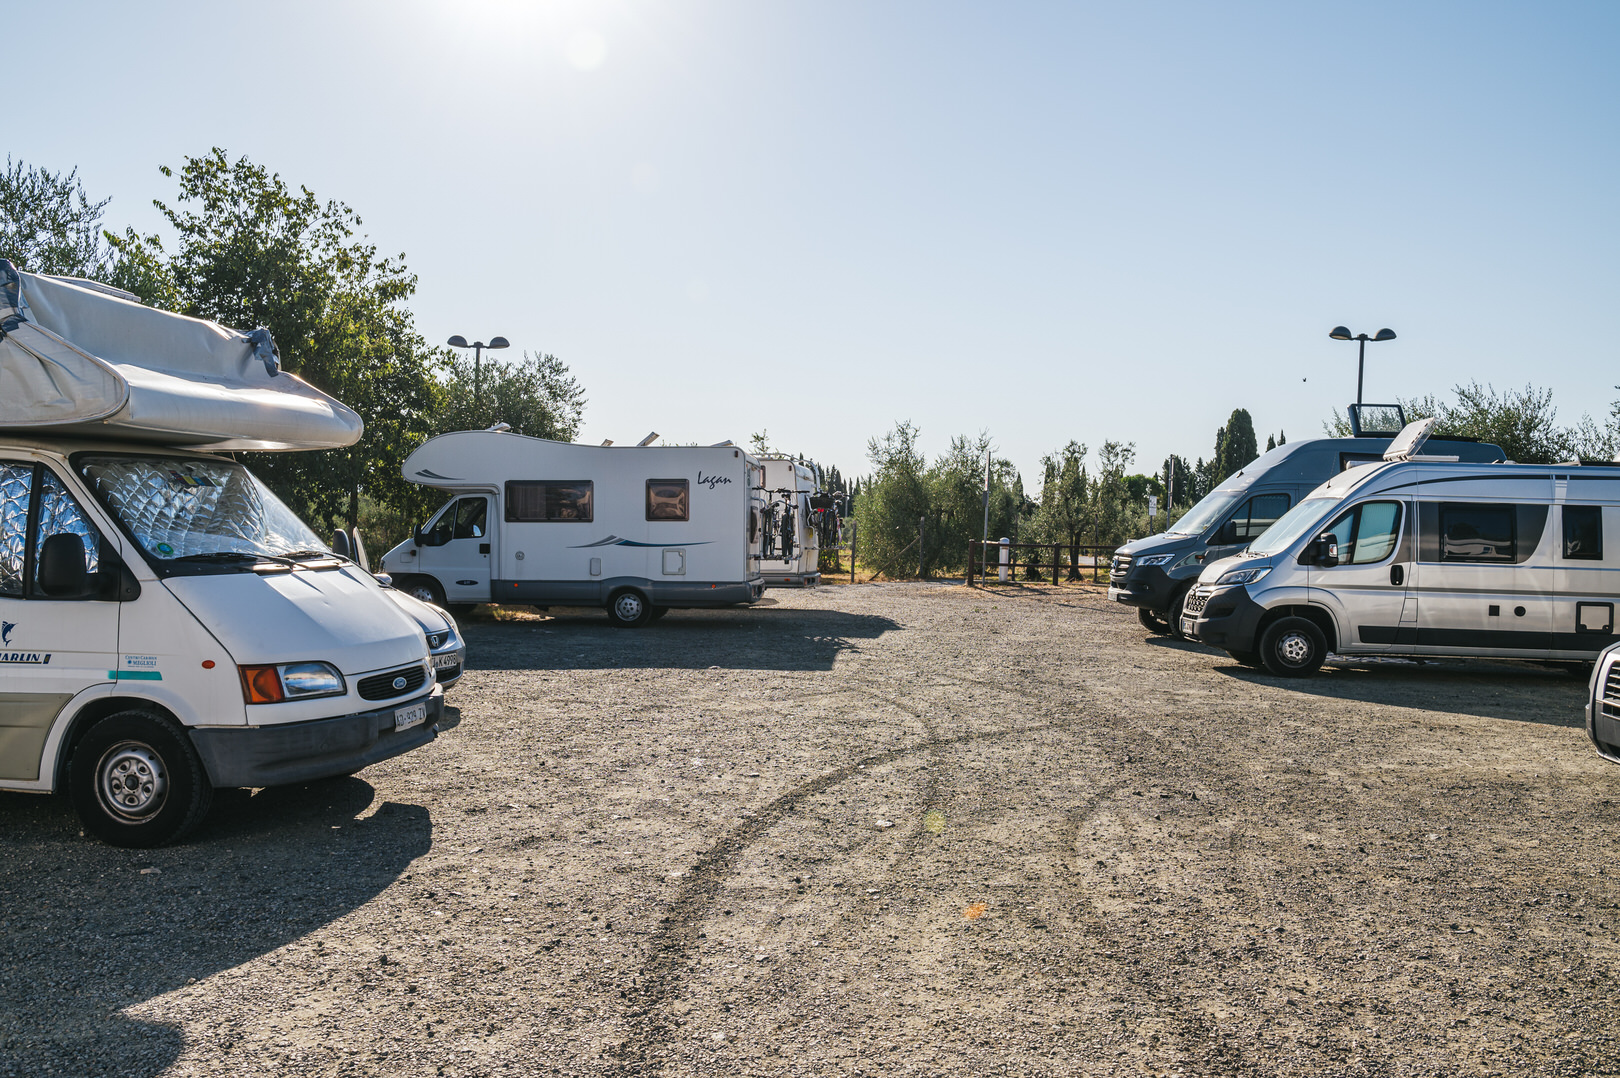 Günstige Campingplätze in der Toskana